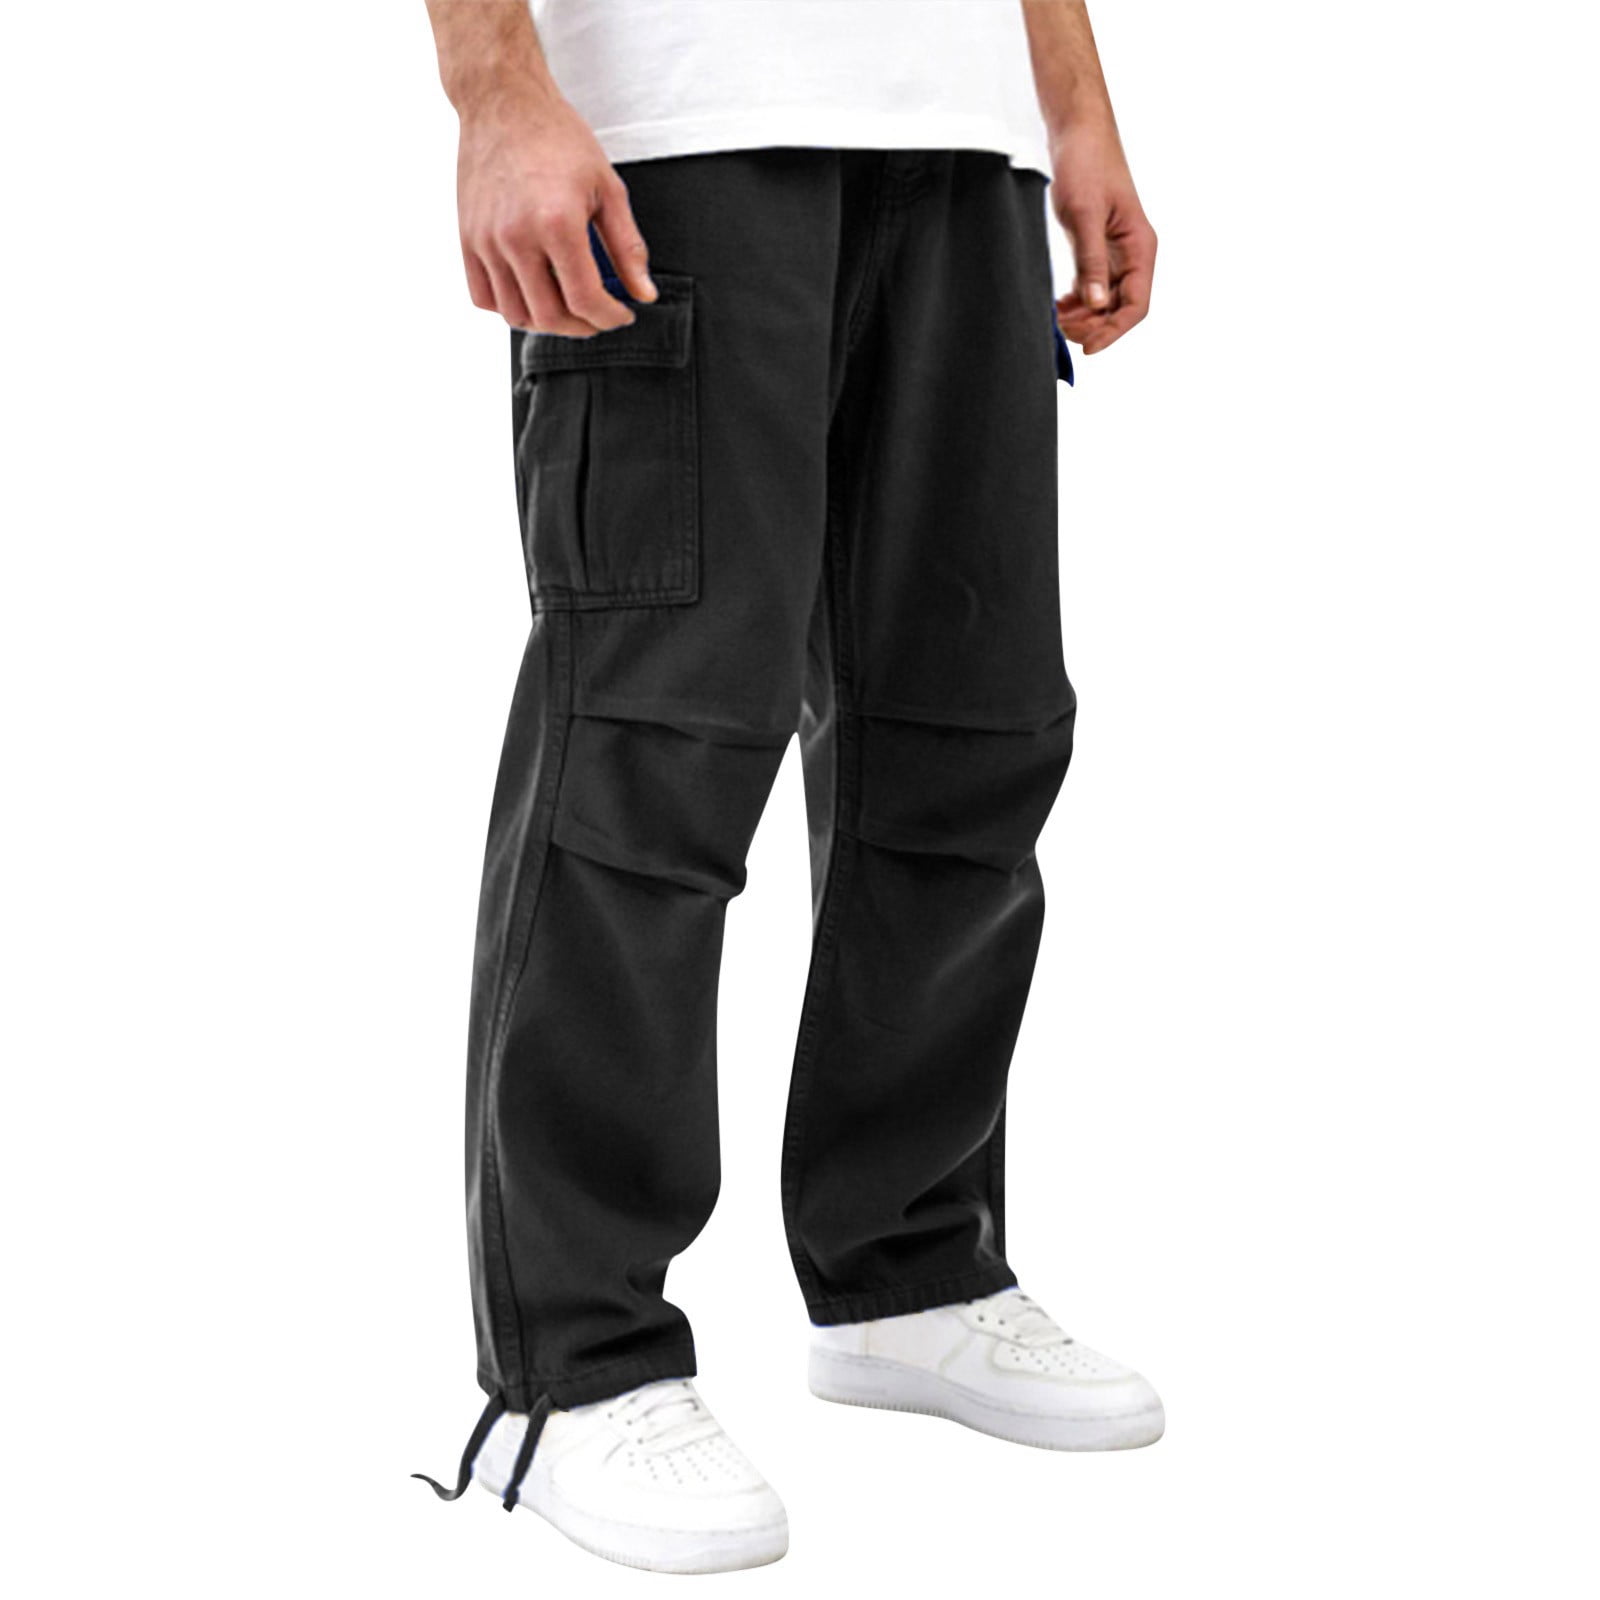 PMUYBHF Black Jeans Men 28X30 Mens Cargo Pants Casual Joggers Pants Cotton  Loose Straight Sweatpants Xxxl Stretch Jean Shorts for Men